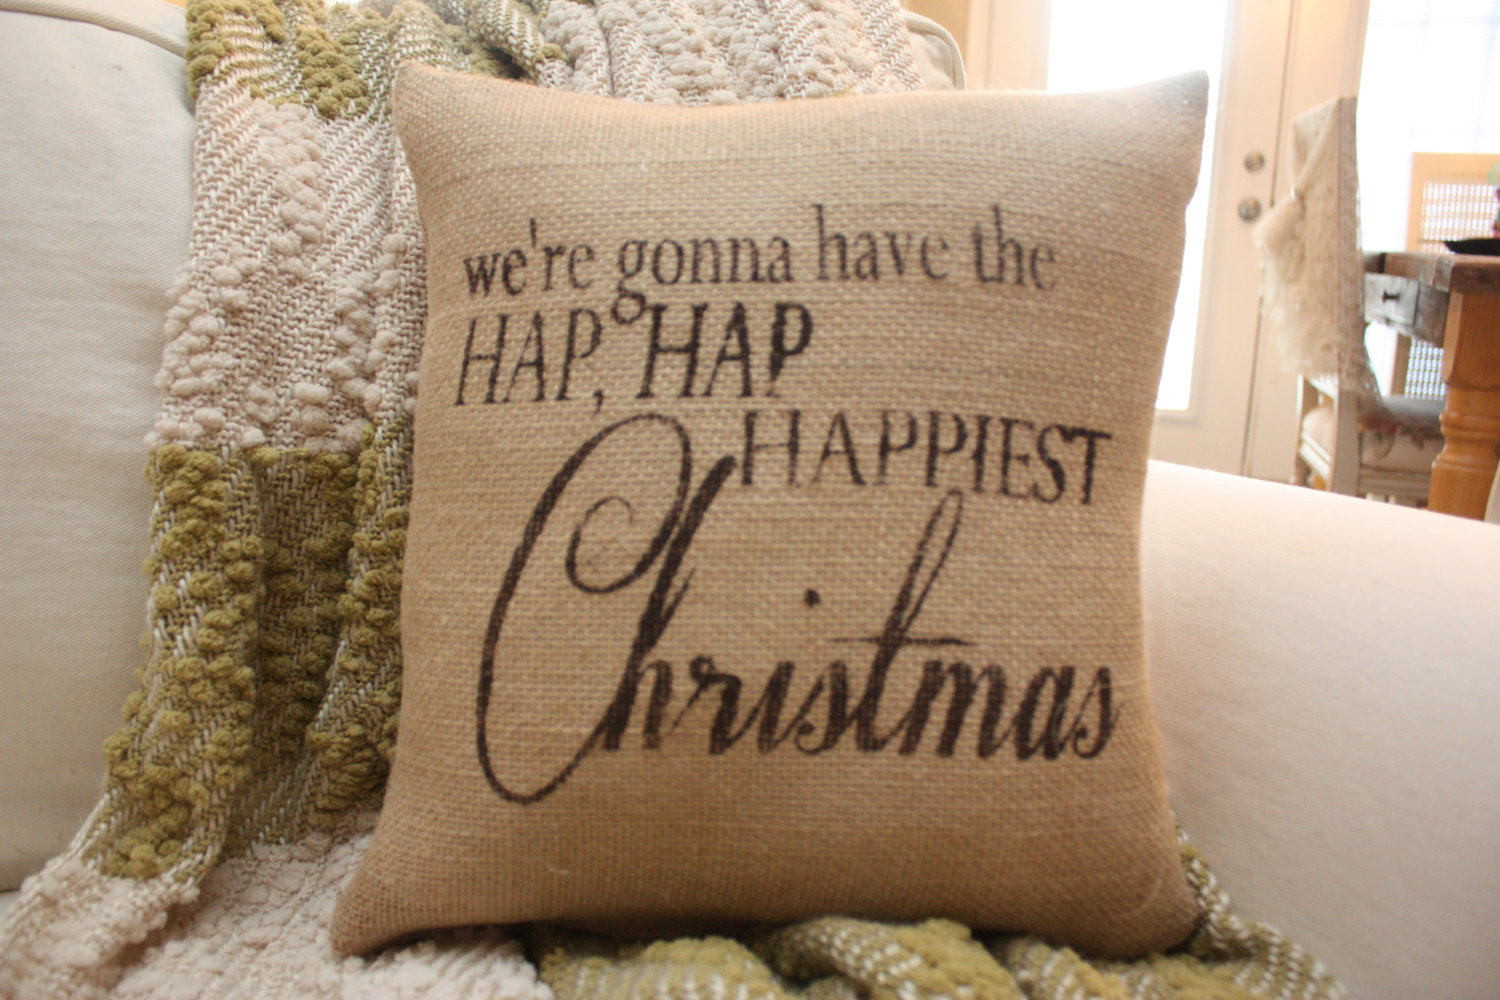 Hap Hap Happiest Christmas Quote
 Burlap Pillow We re Gonna Have The Hap Hap Happiest